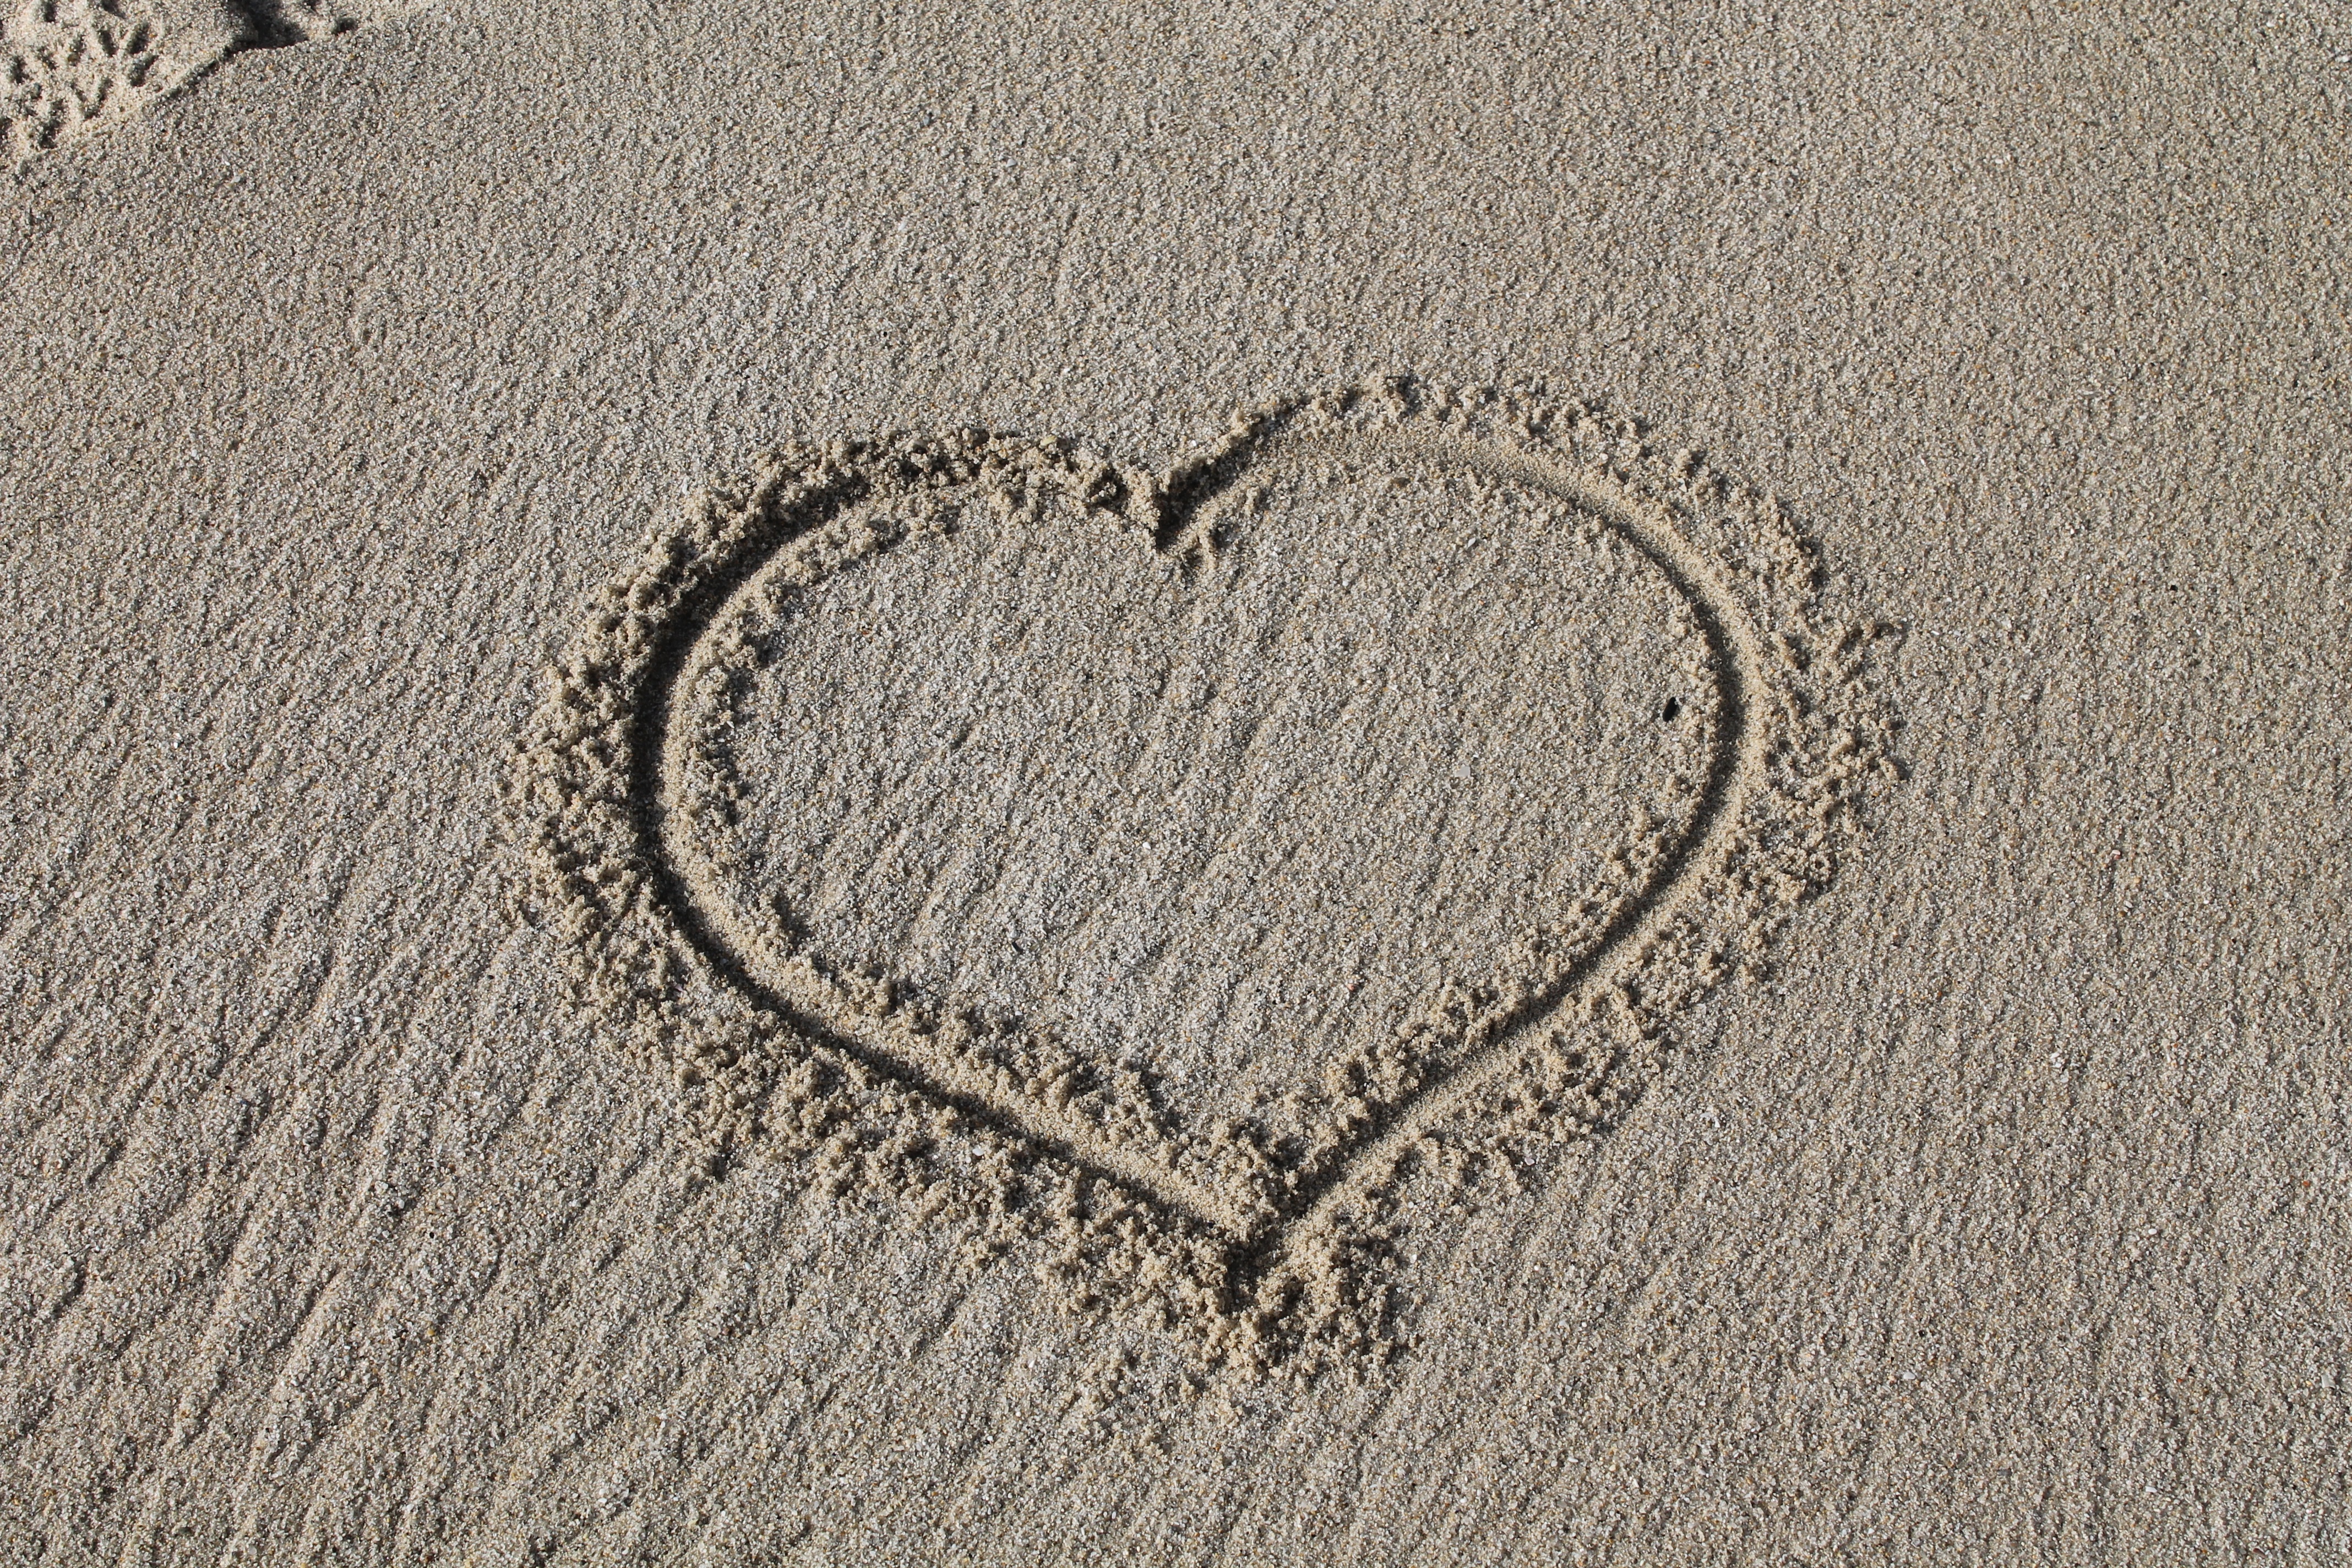 Бесплатное фото Сердечко на песке